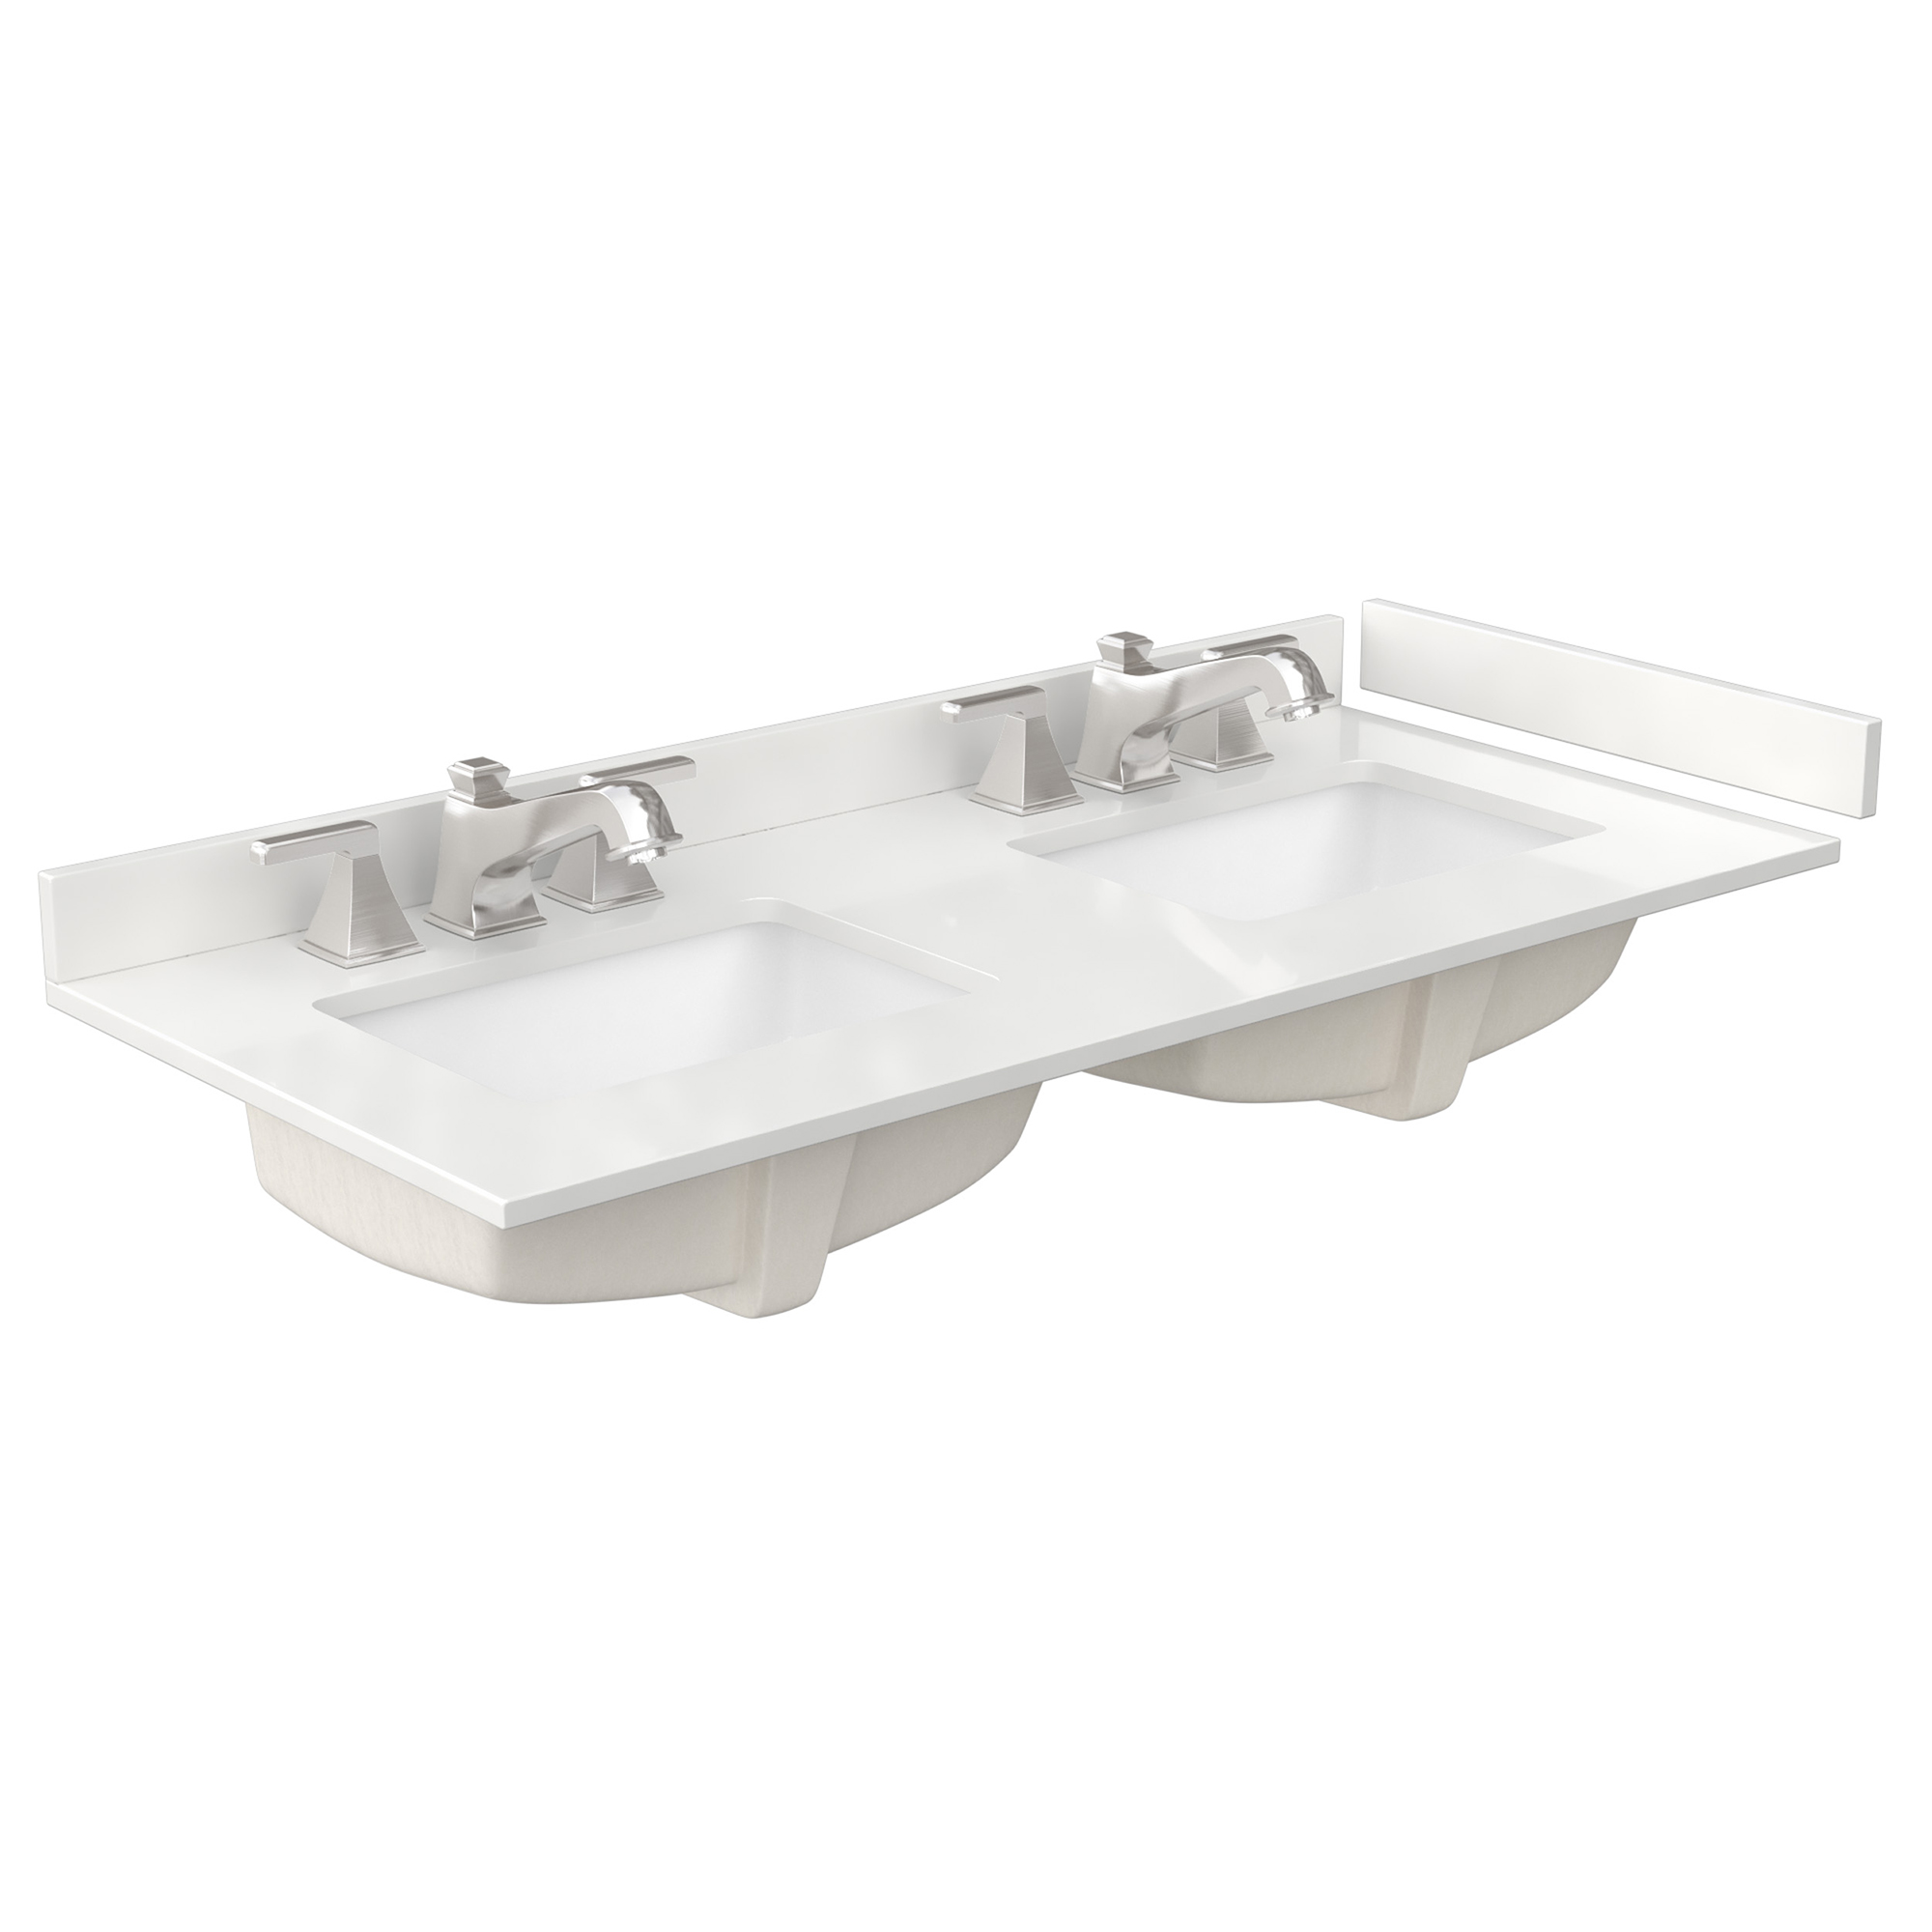 48" double countertop - white quartz (1000) with undermount square sinks (3-hole) - includes backsplash and sidesplash